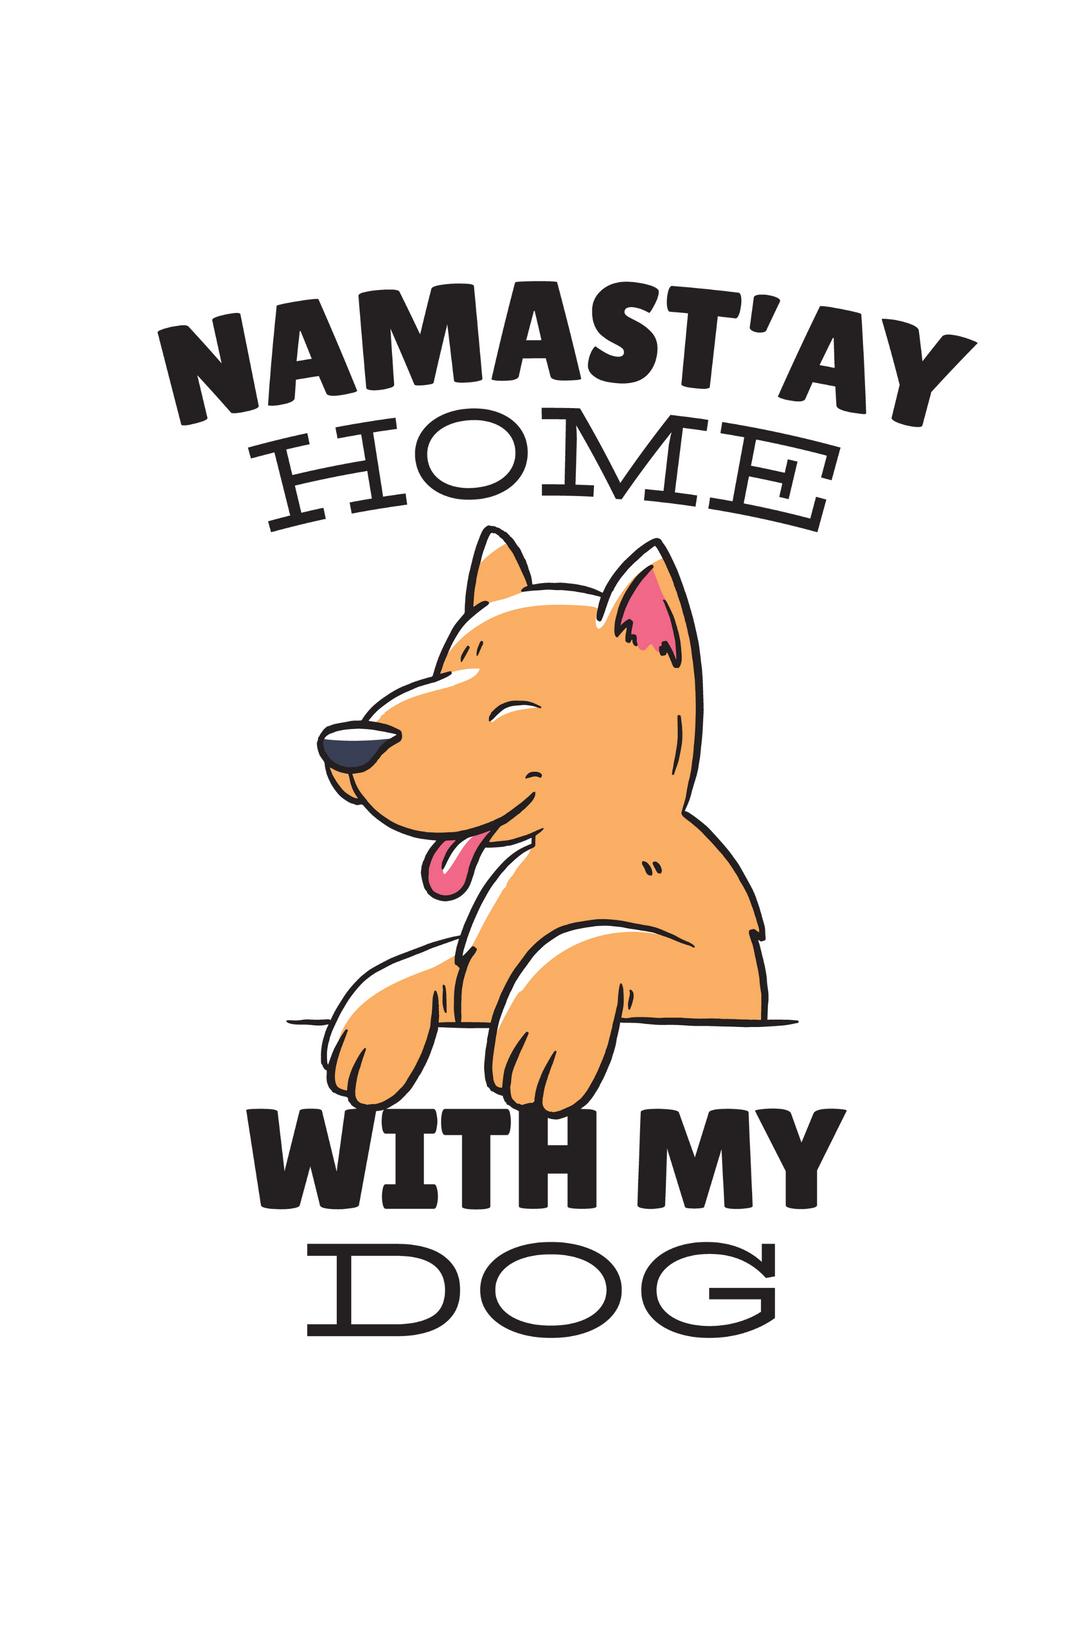 Namastay Home Dog Printed T-Shirt For Women - WowWaves - 1